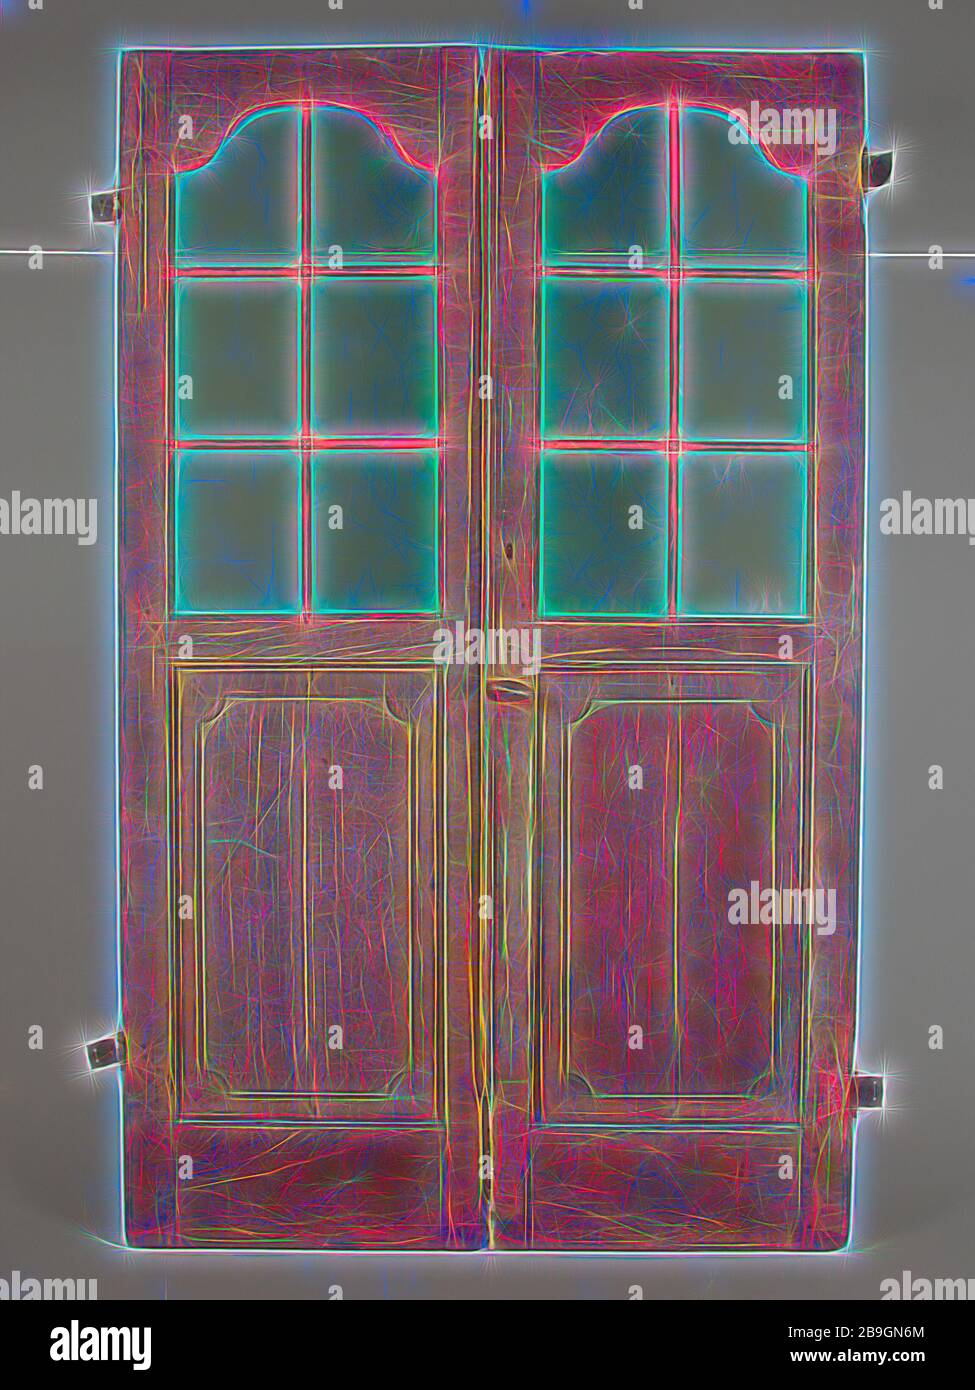 Puerta De Doble Panel Fotos e Imágenes de stock - Alamy